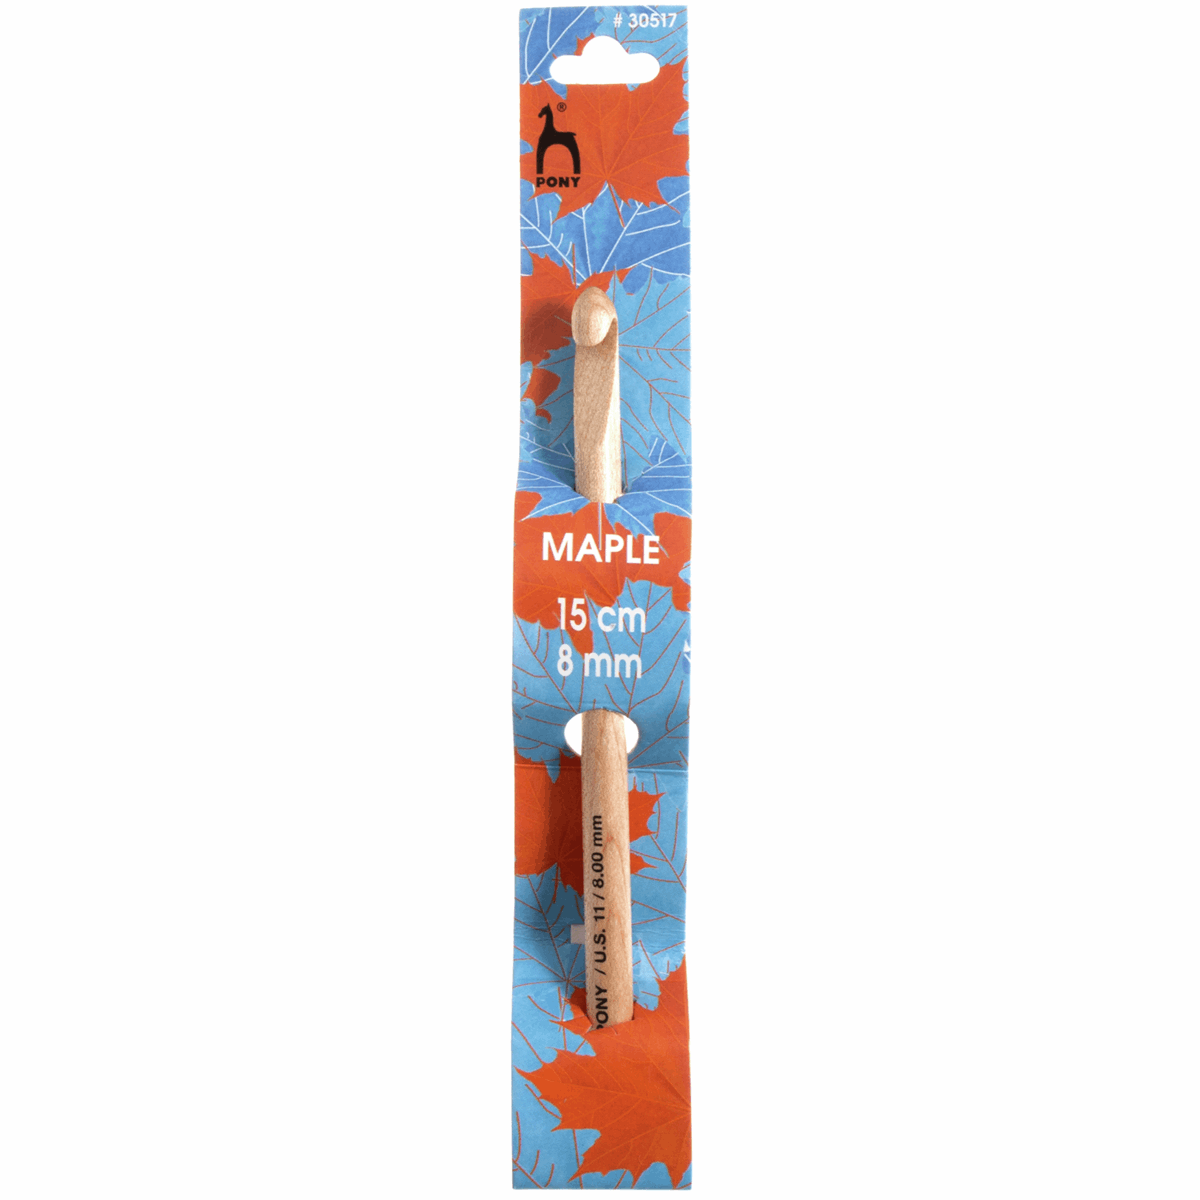 PONY Maple Crochet Hook - 15cm x 8mm